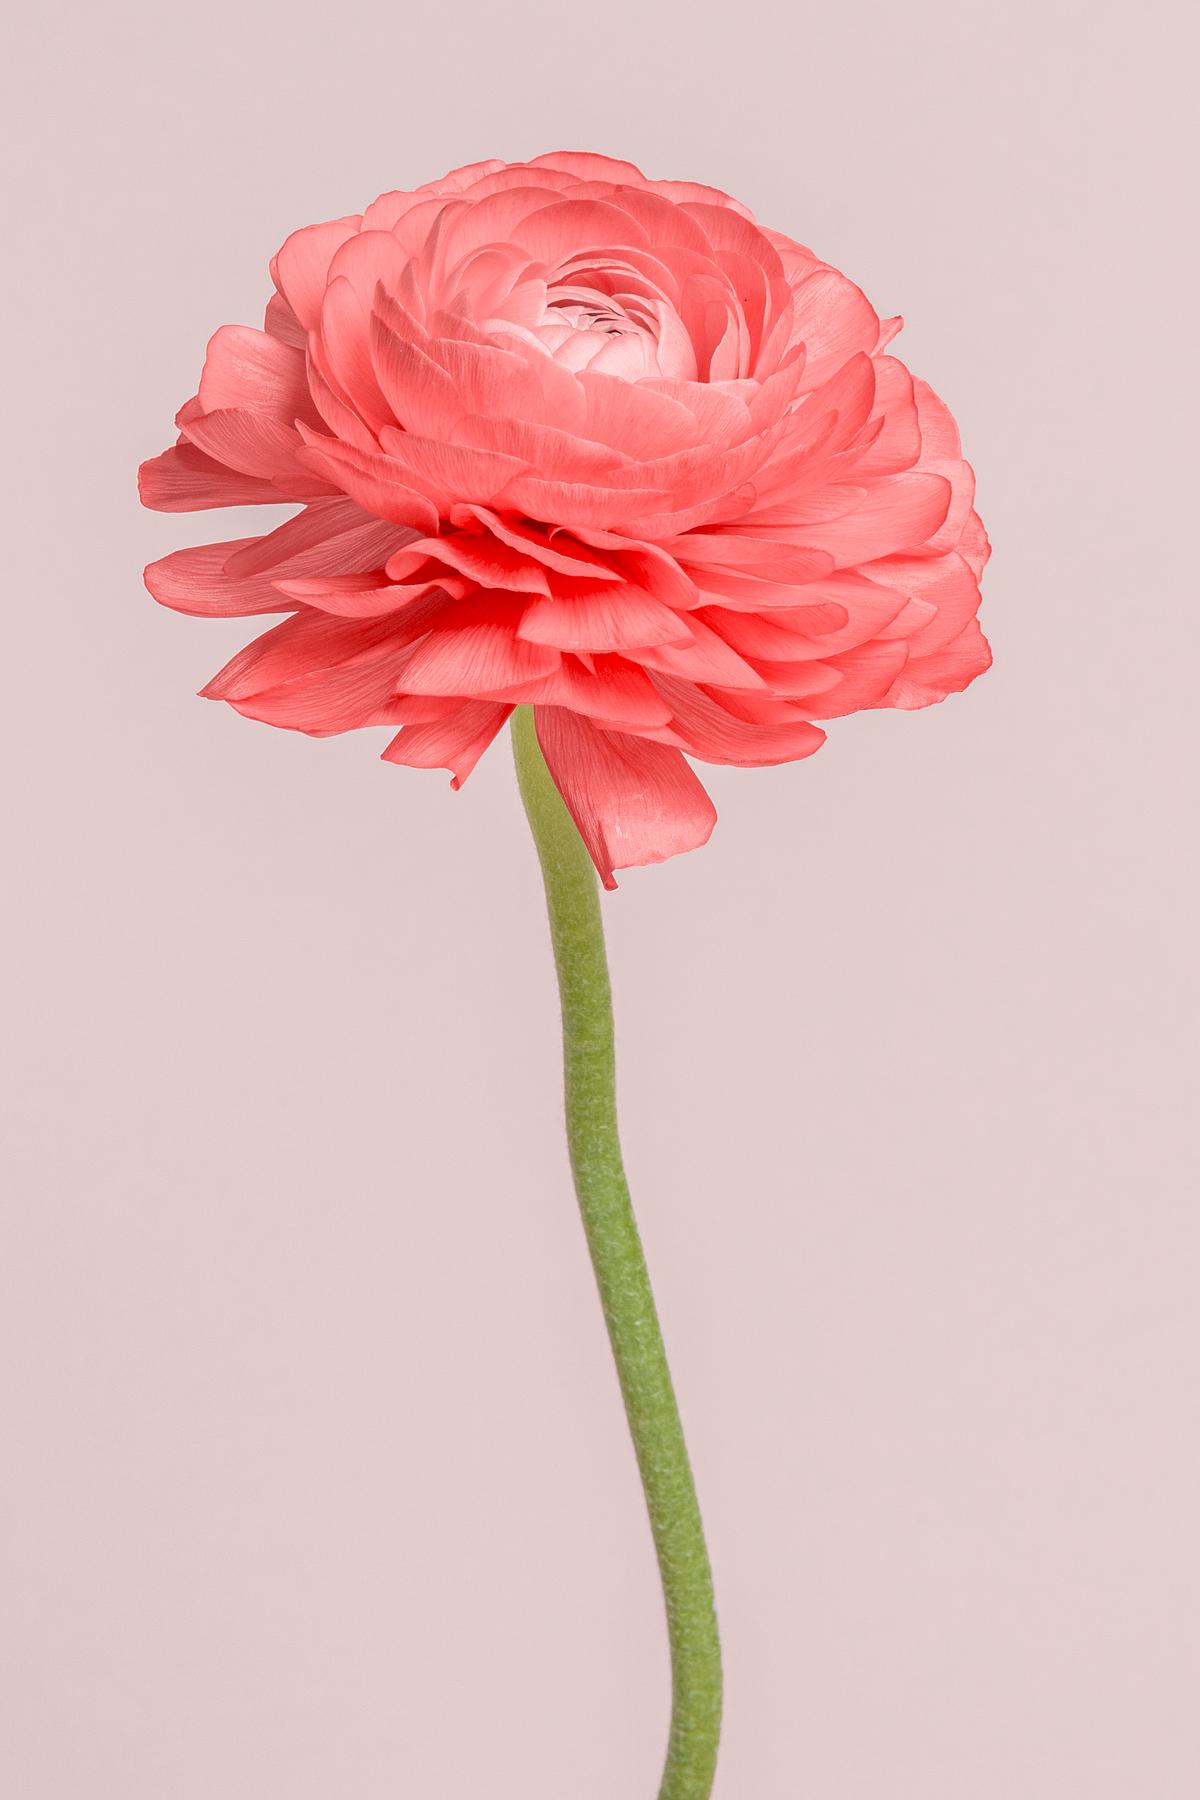 Blooming pink ranunculus flower | Premium Photo - rawpixel